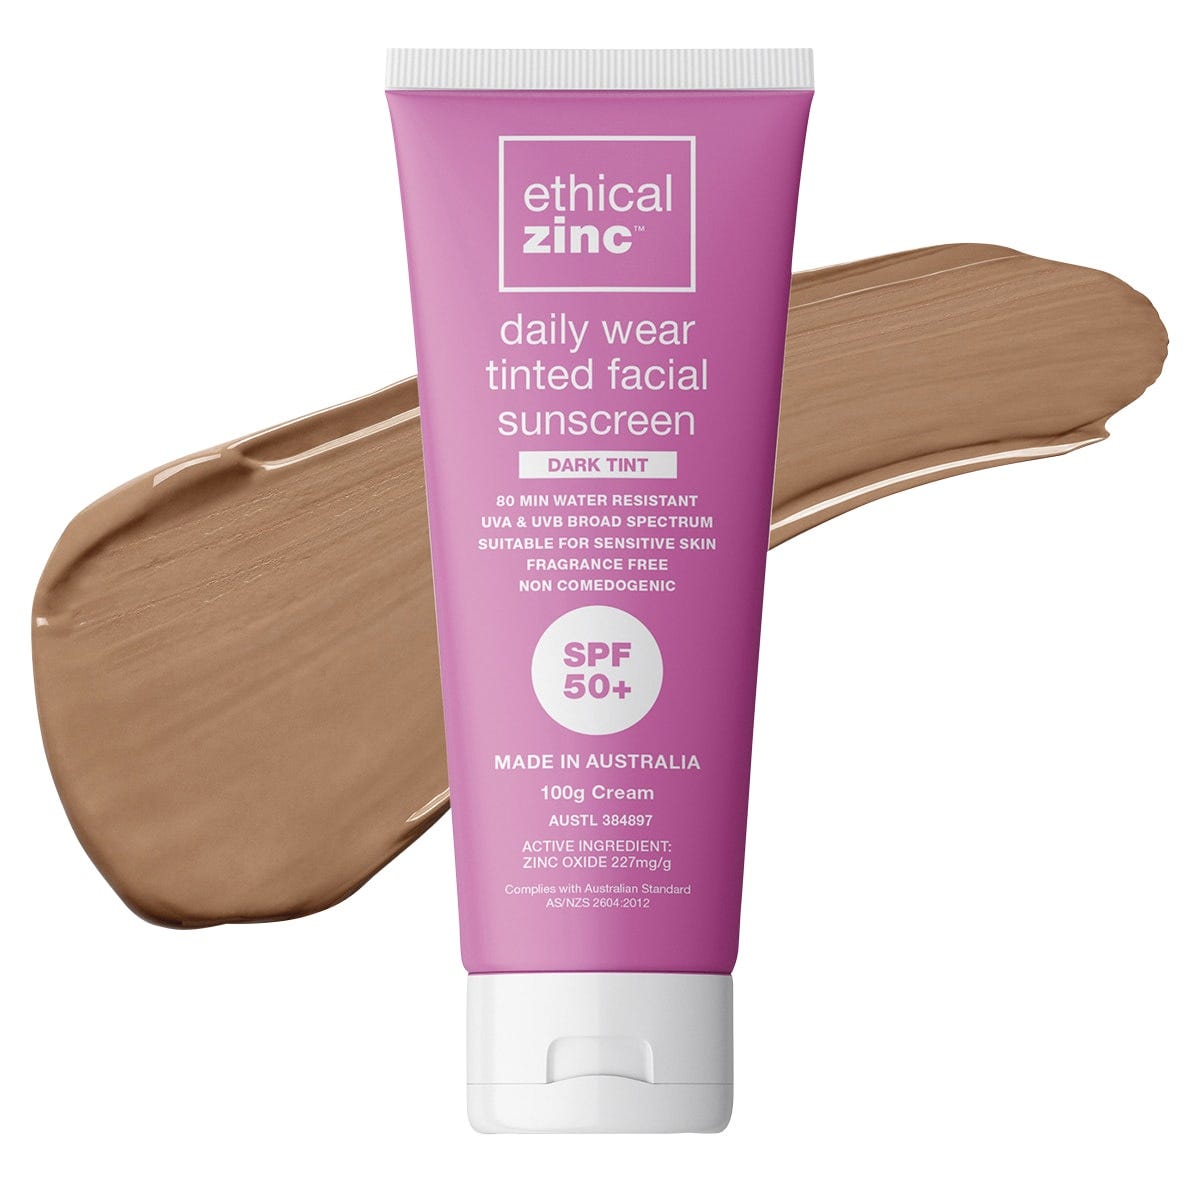 Ethical Zinc Daily Wear Tinted Facial Sunscreen Dark Tint SPF 50+